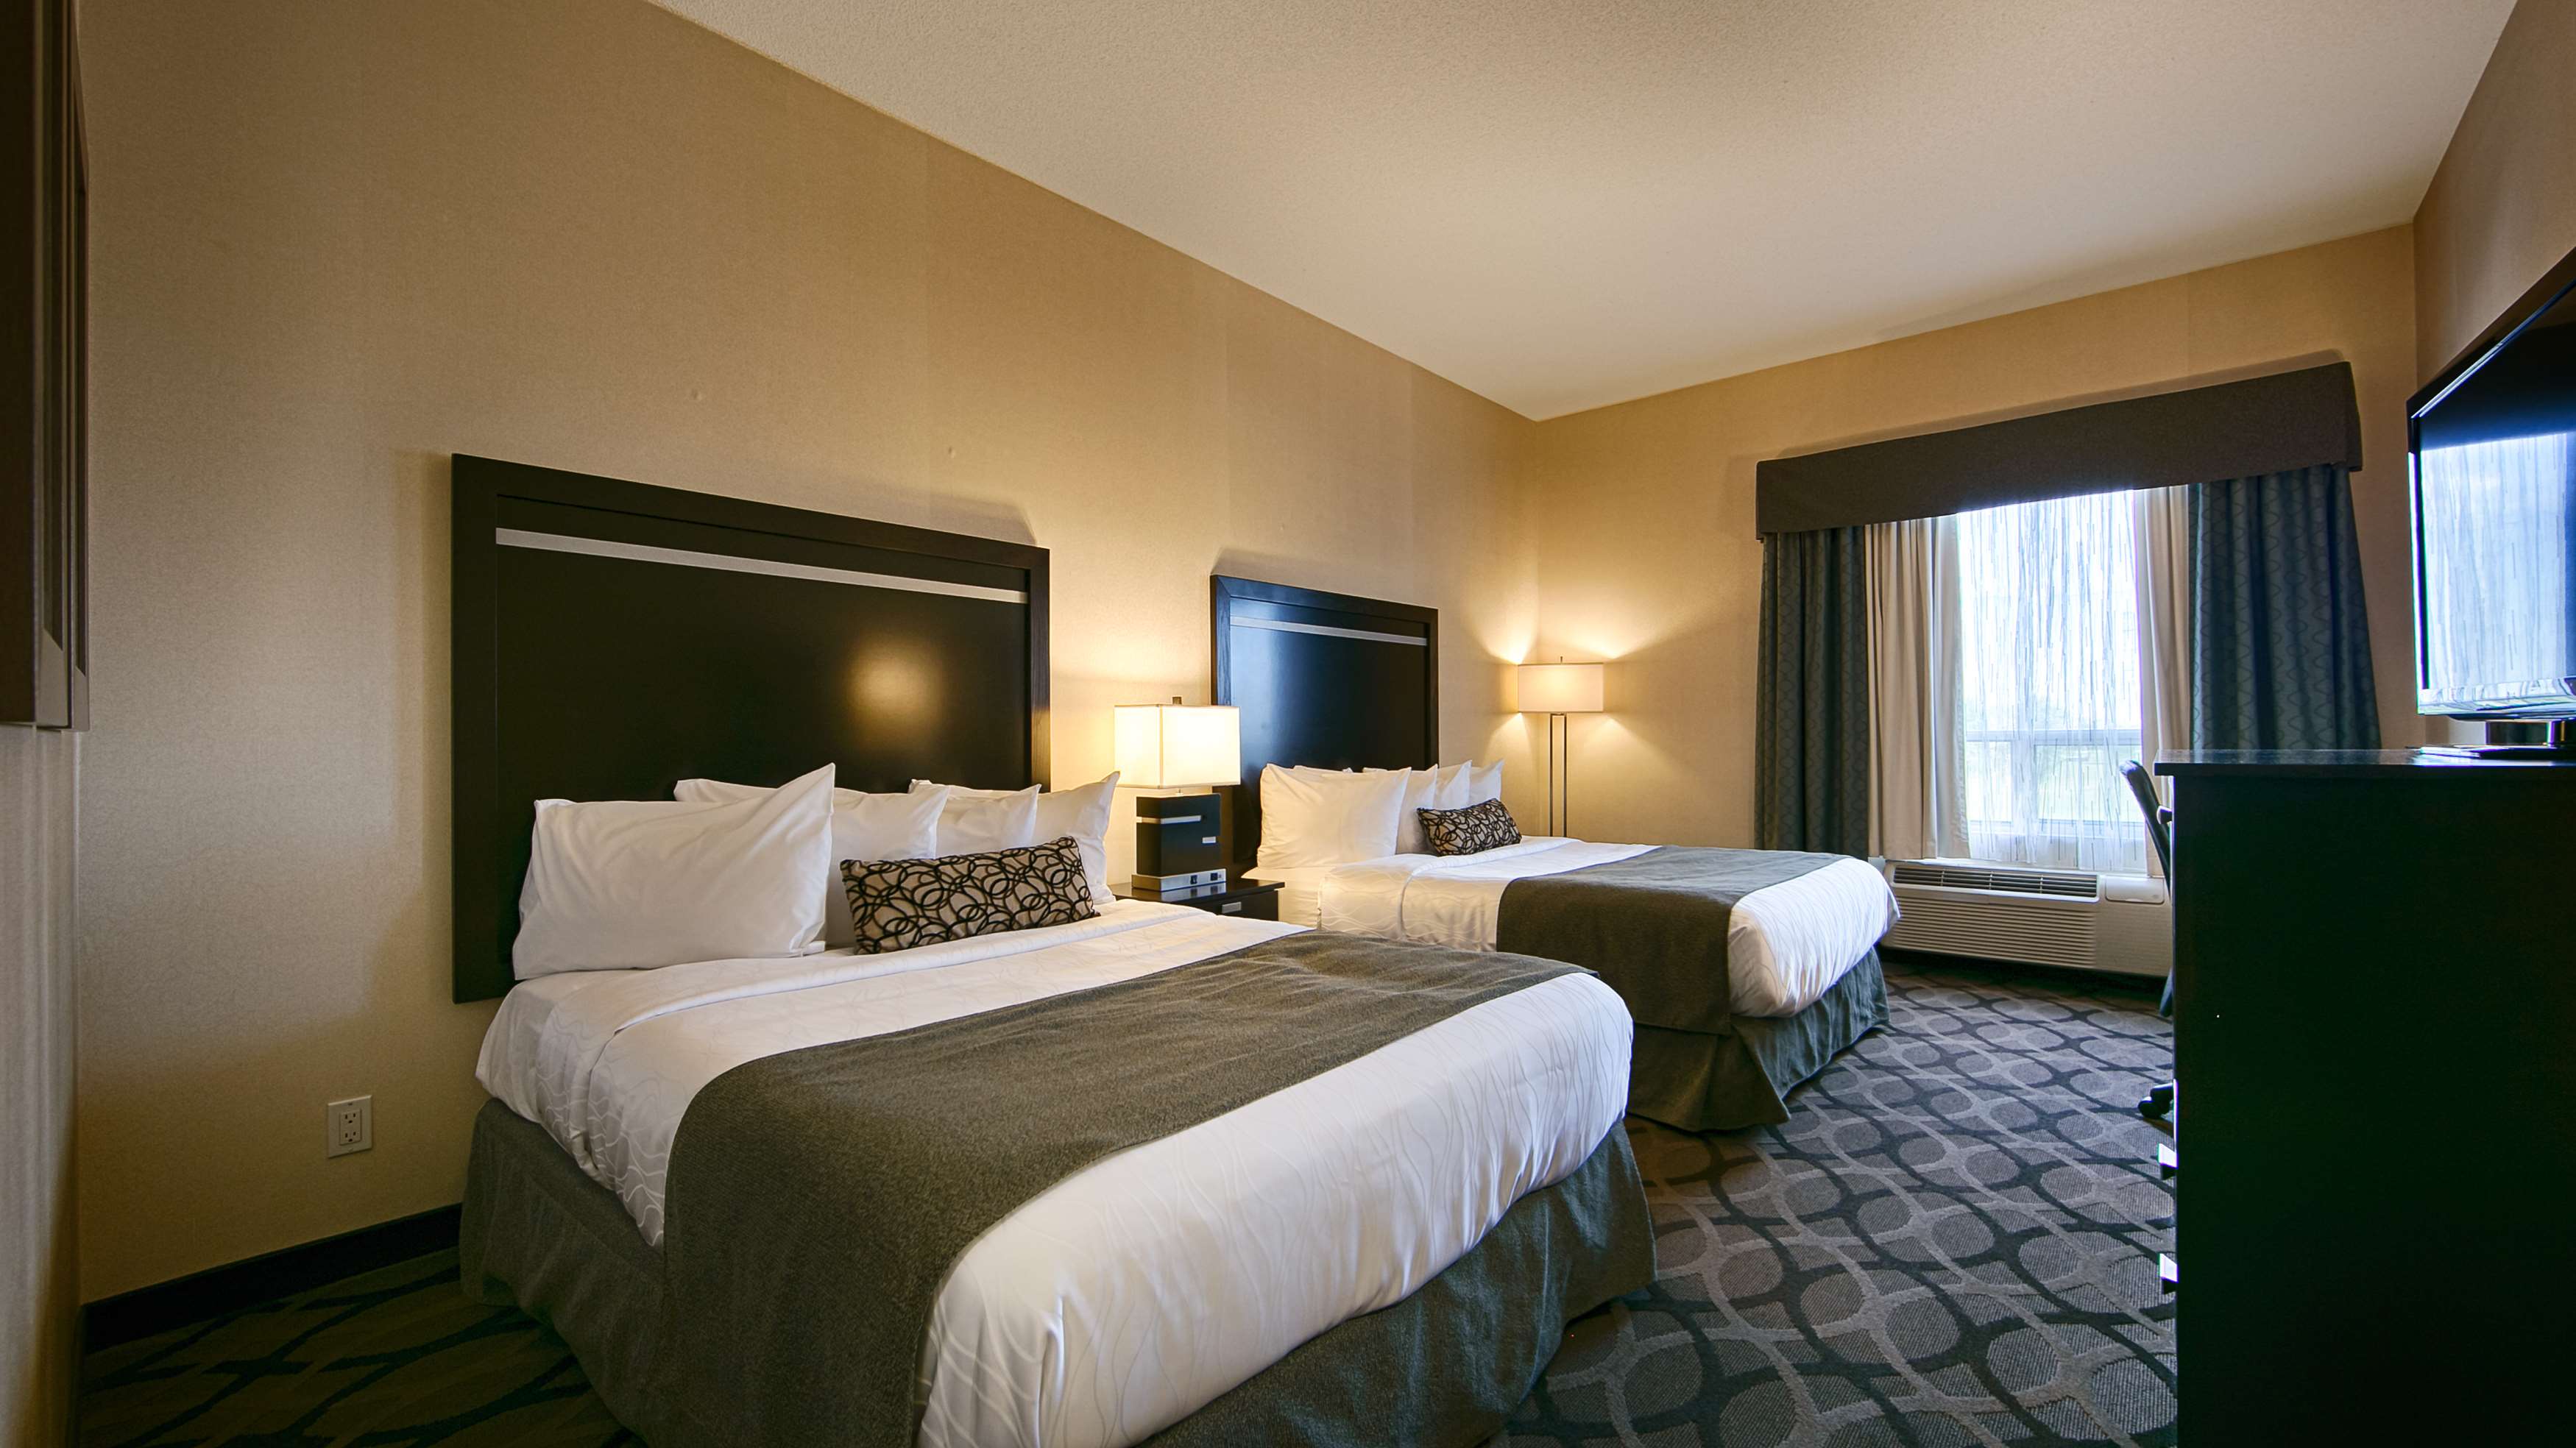 Best Western Plus Travel Hotel Toronto Airport in Toronto: Guest Room